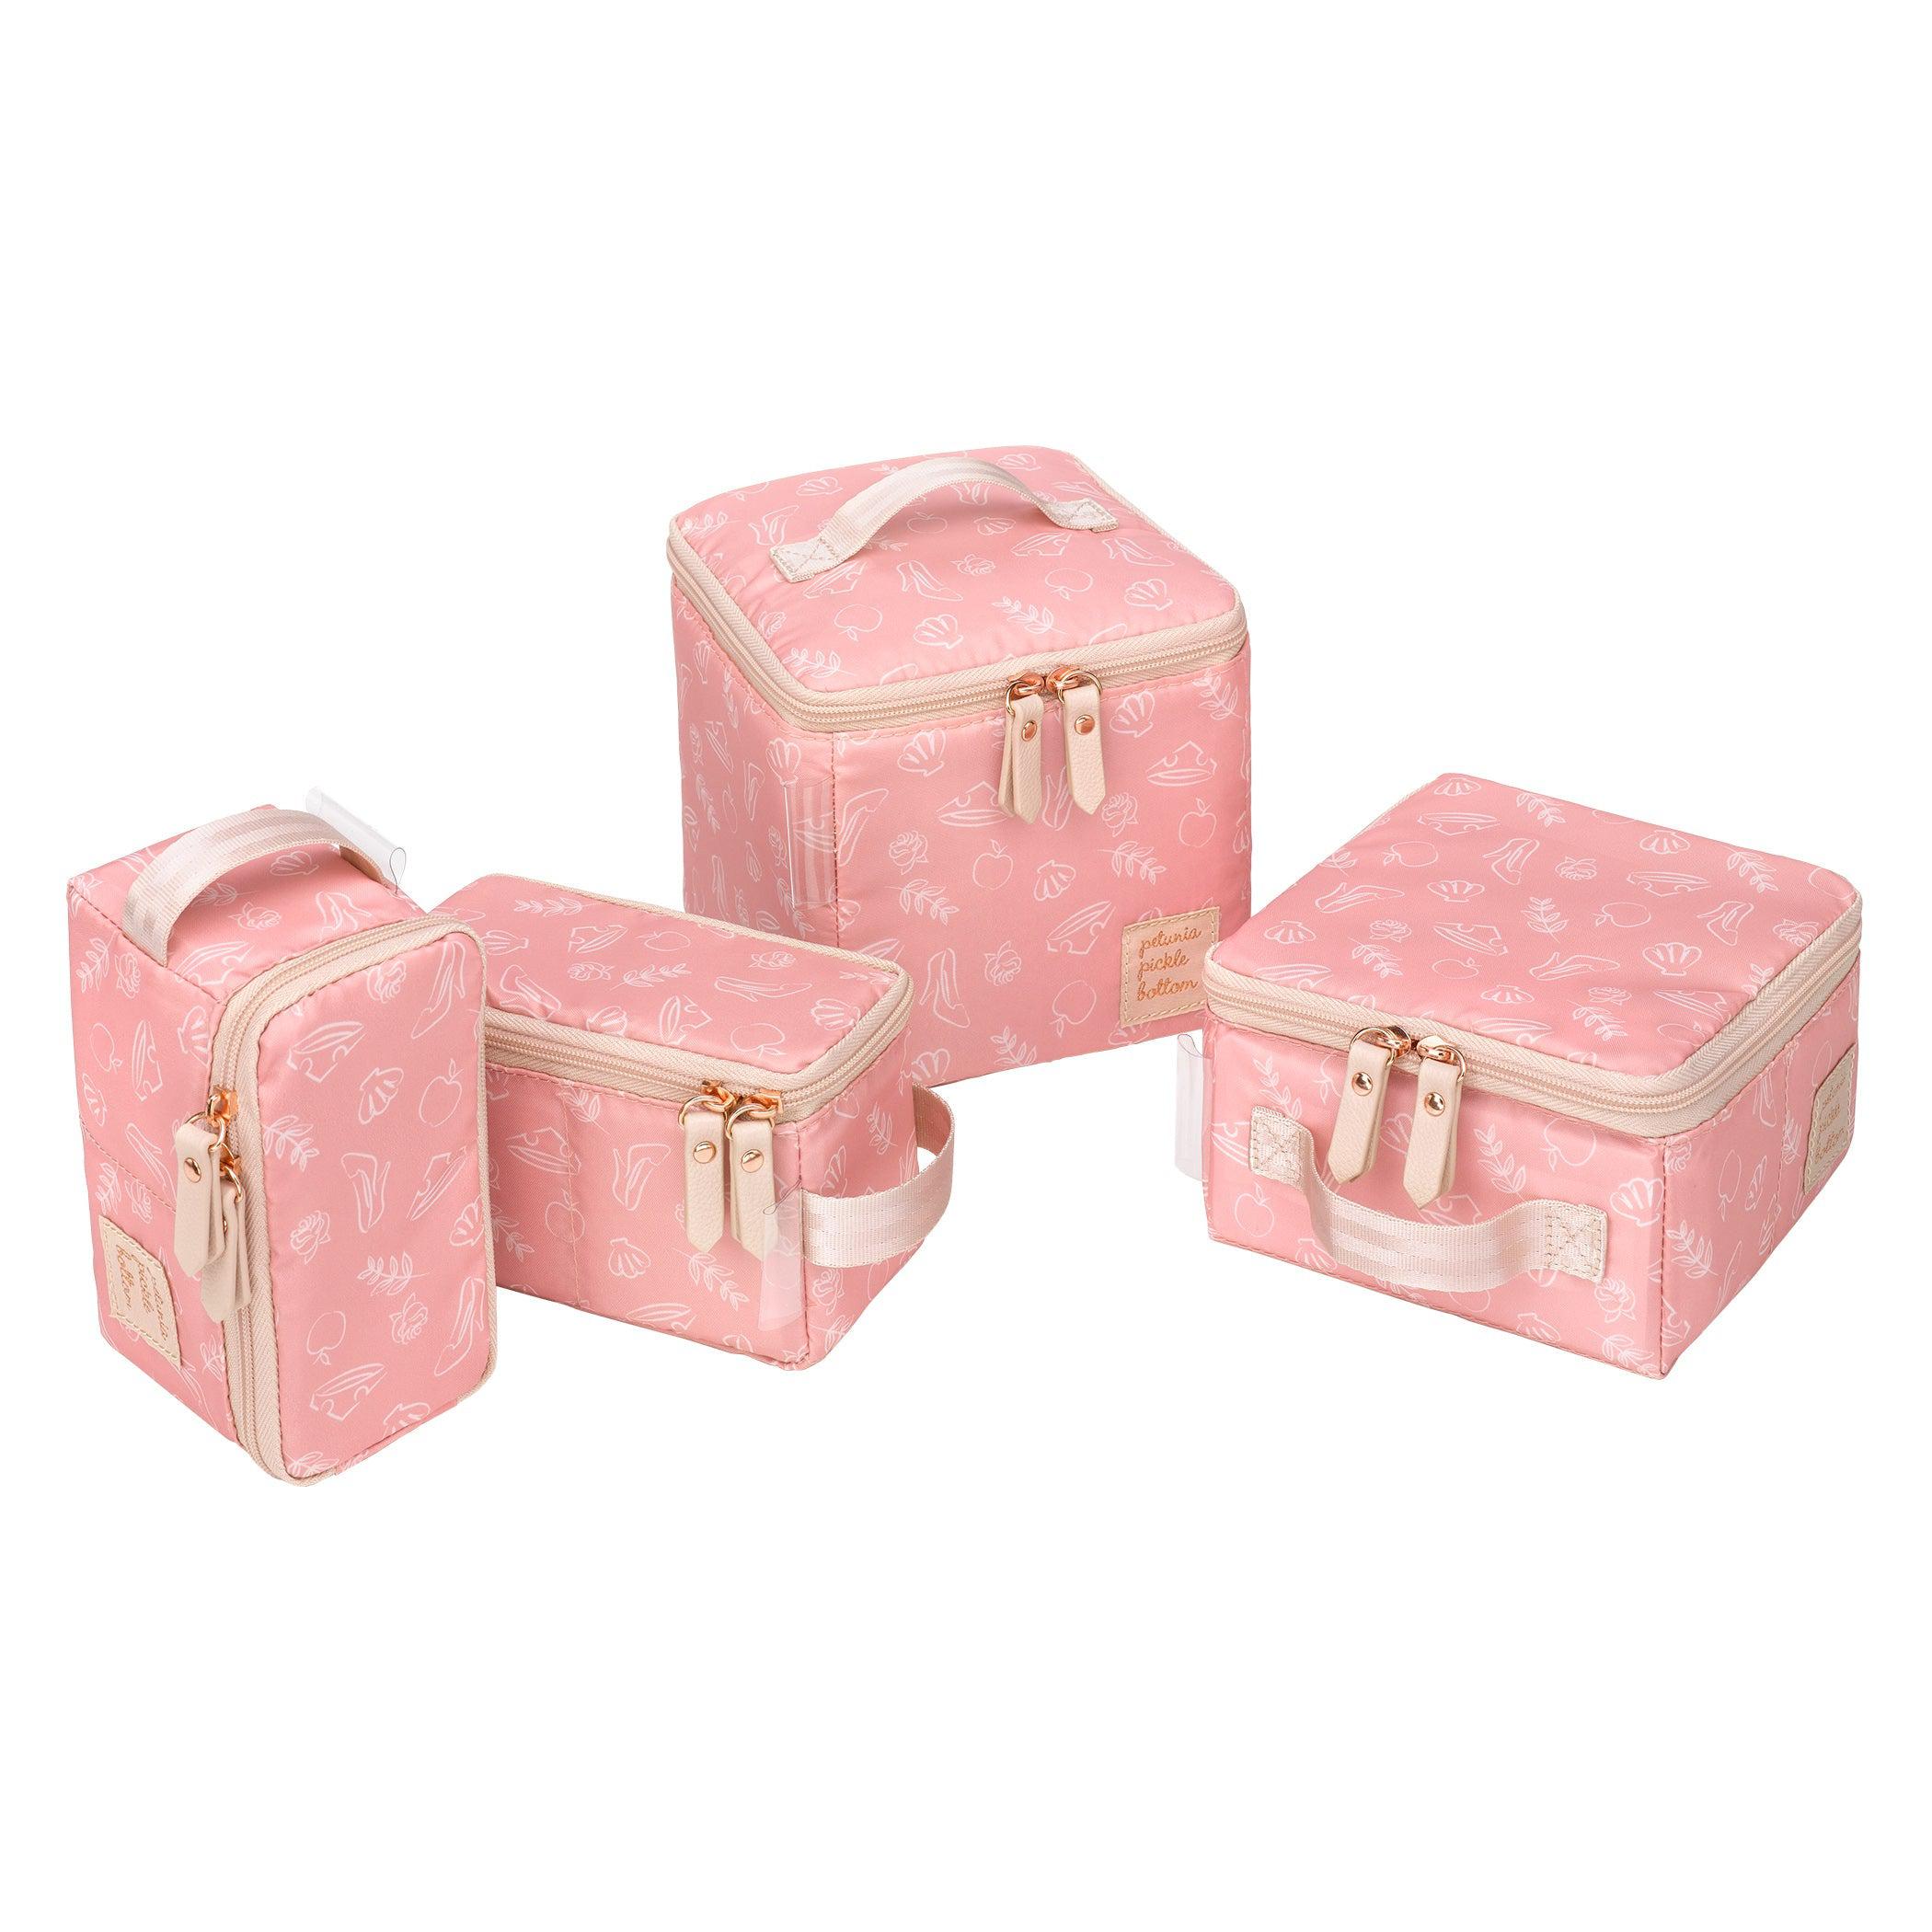 Petunia Pickle Bottom Packing Cube Set in Disney Princess